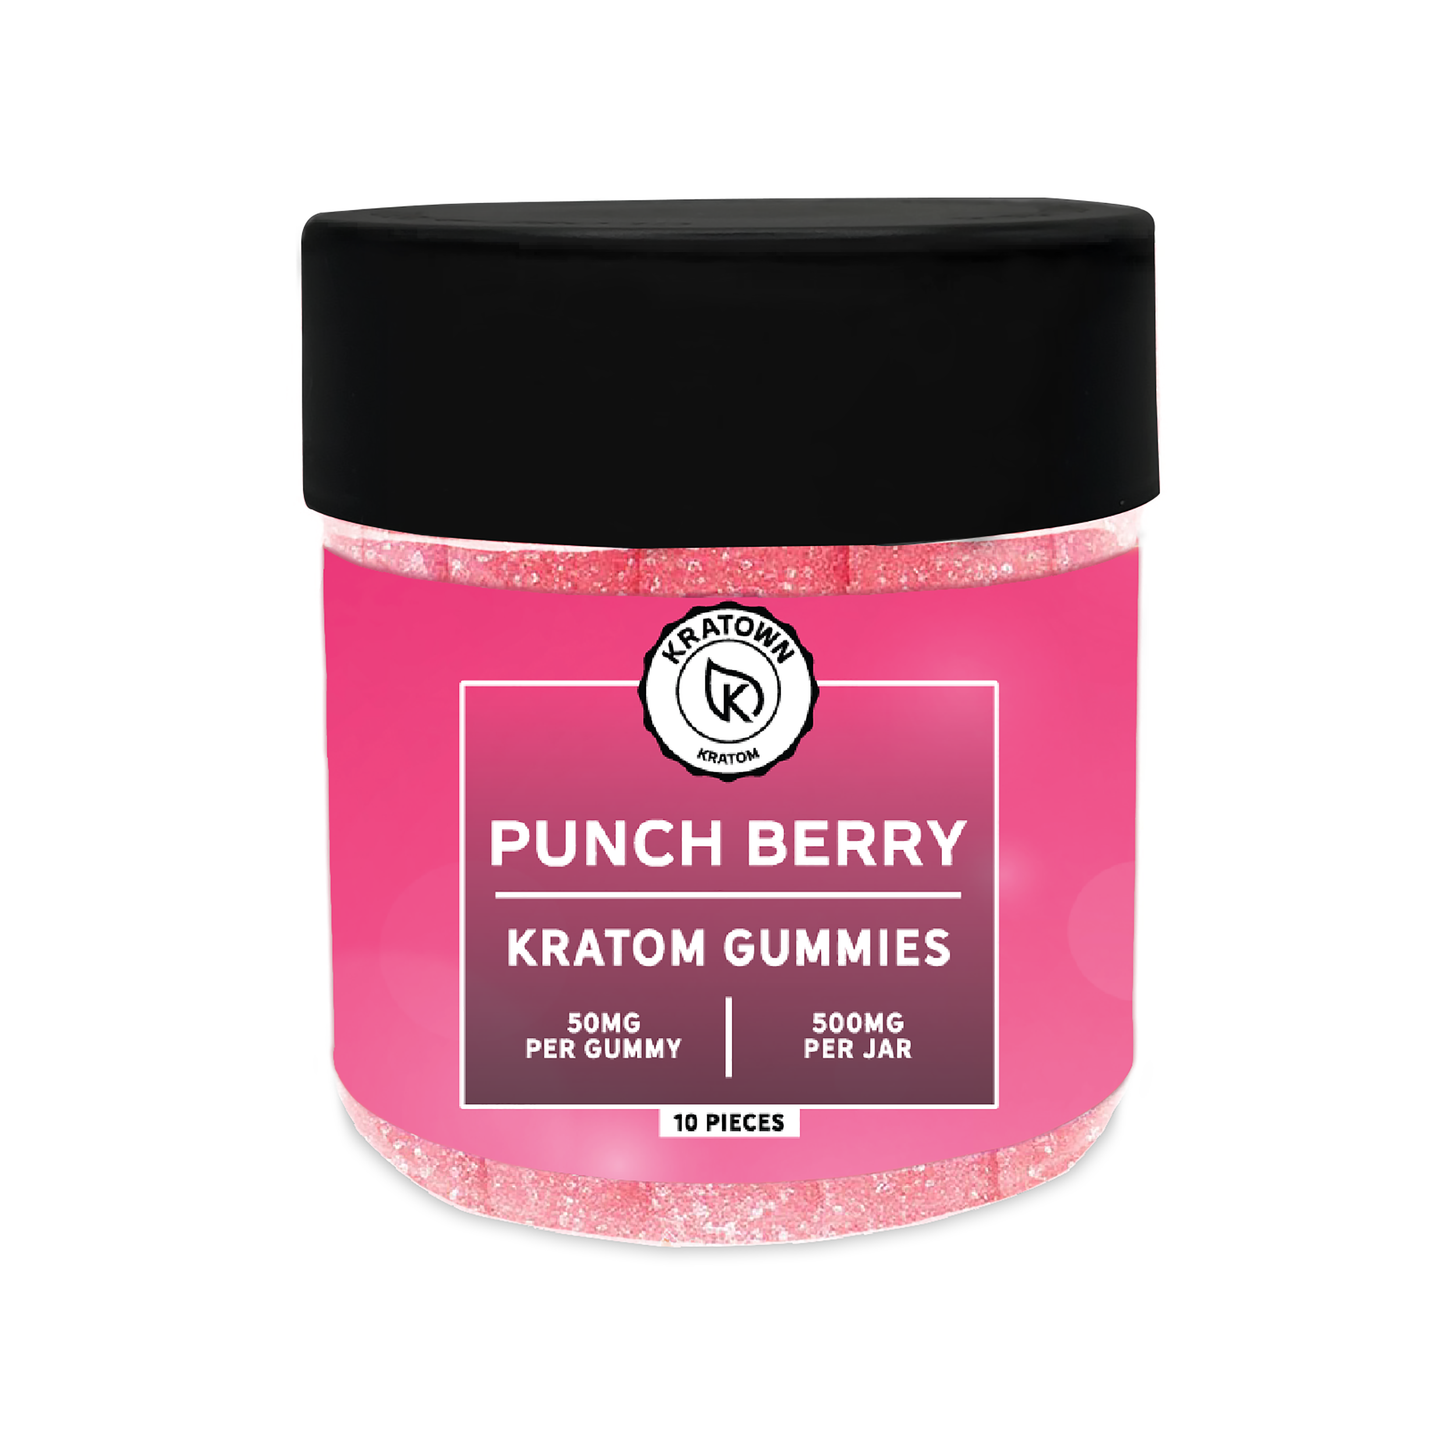 25mg Kratom Gummies, Punch Berry 10pcs